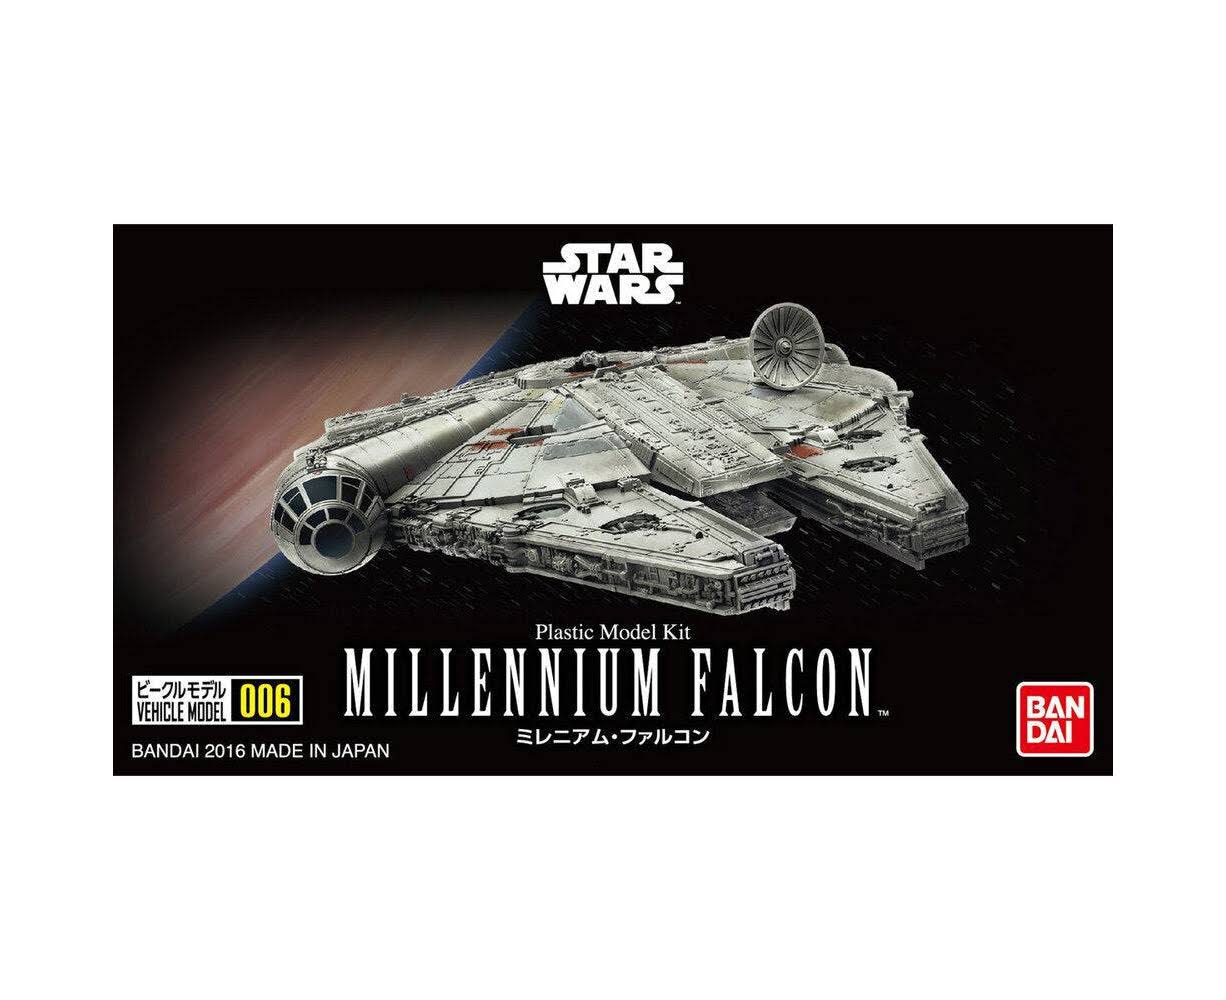 Bandai Star Wars Vehicle Model 006 Millennium Falcon Plastic Model Kit